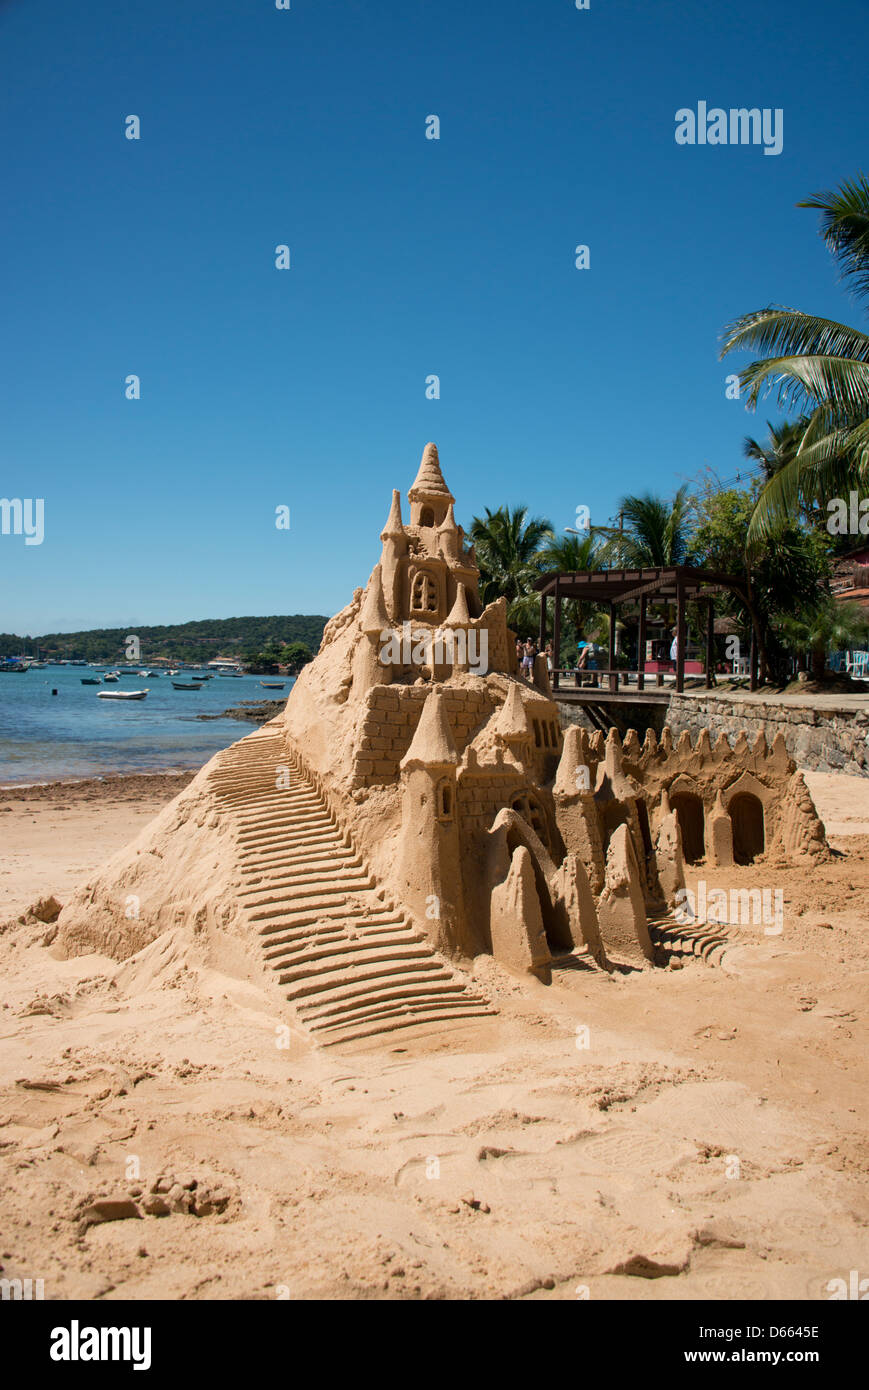 Brazil, state of Rio de Janeiro, Buzios. Sand castle on beach. Stock Photo